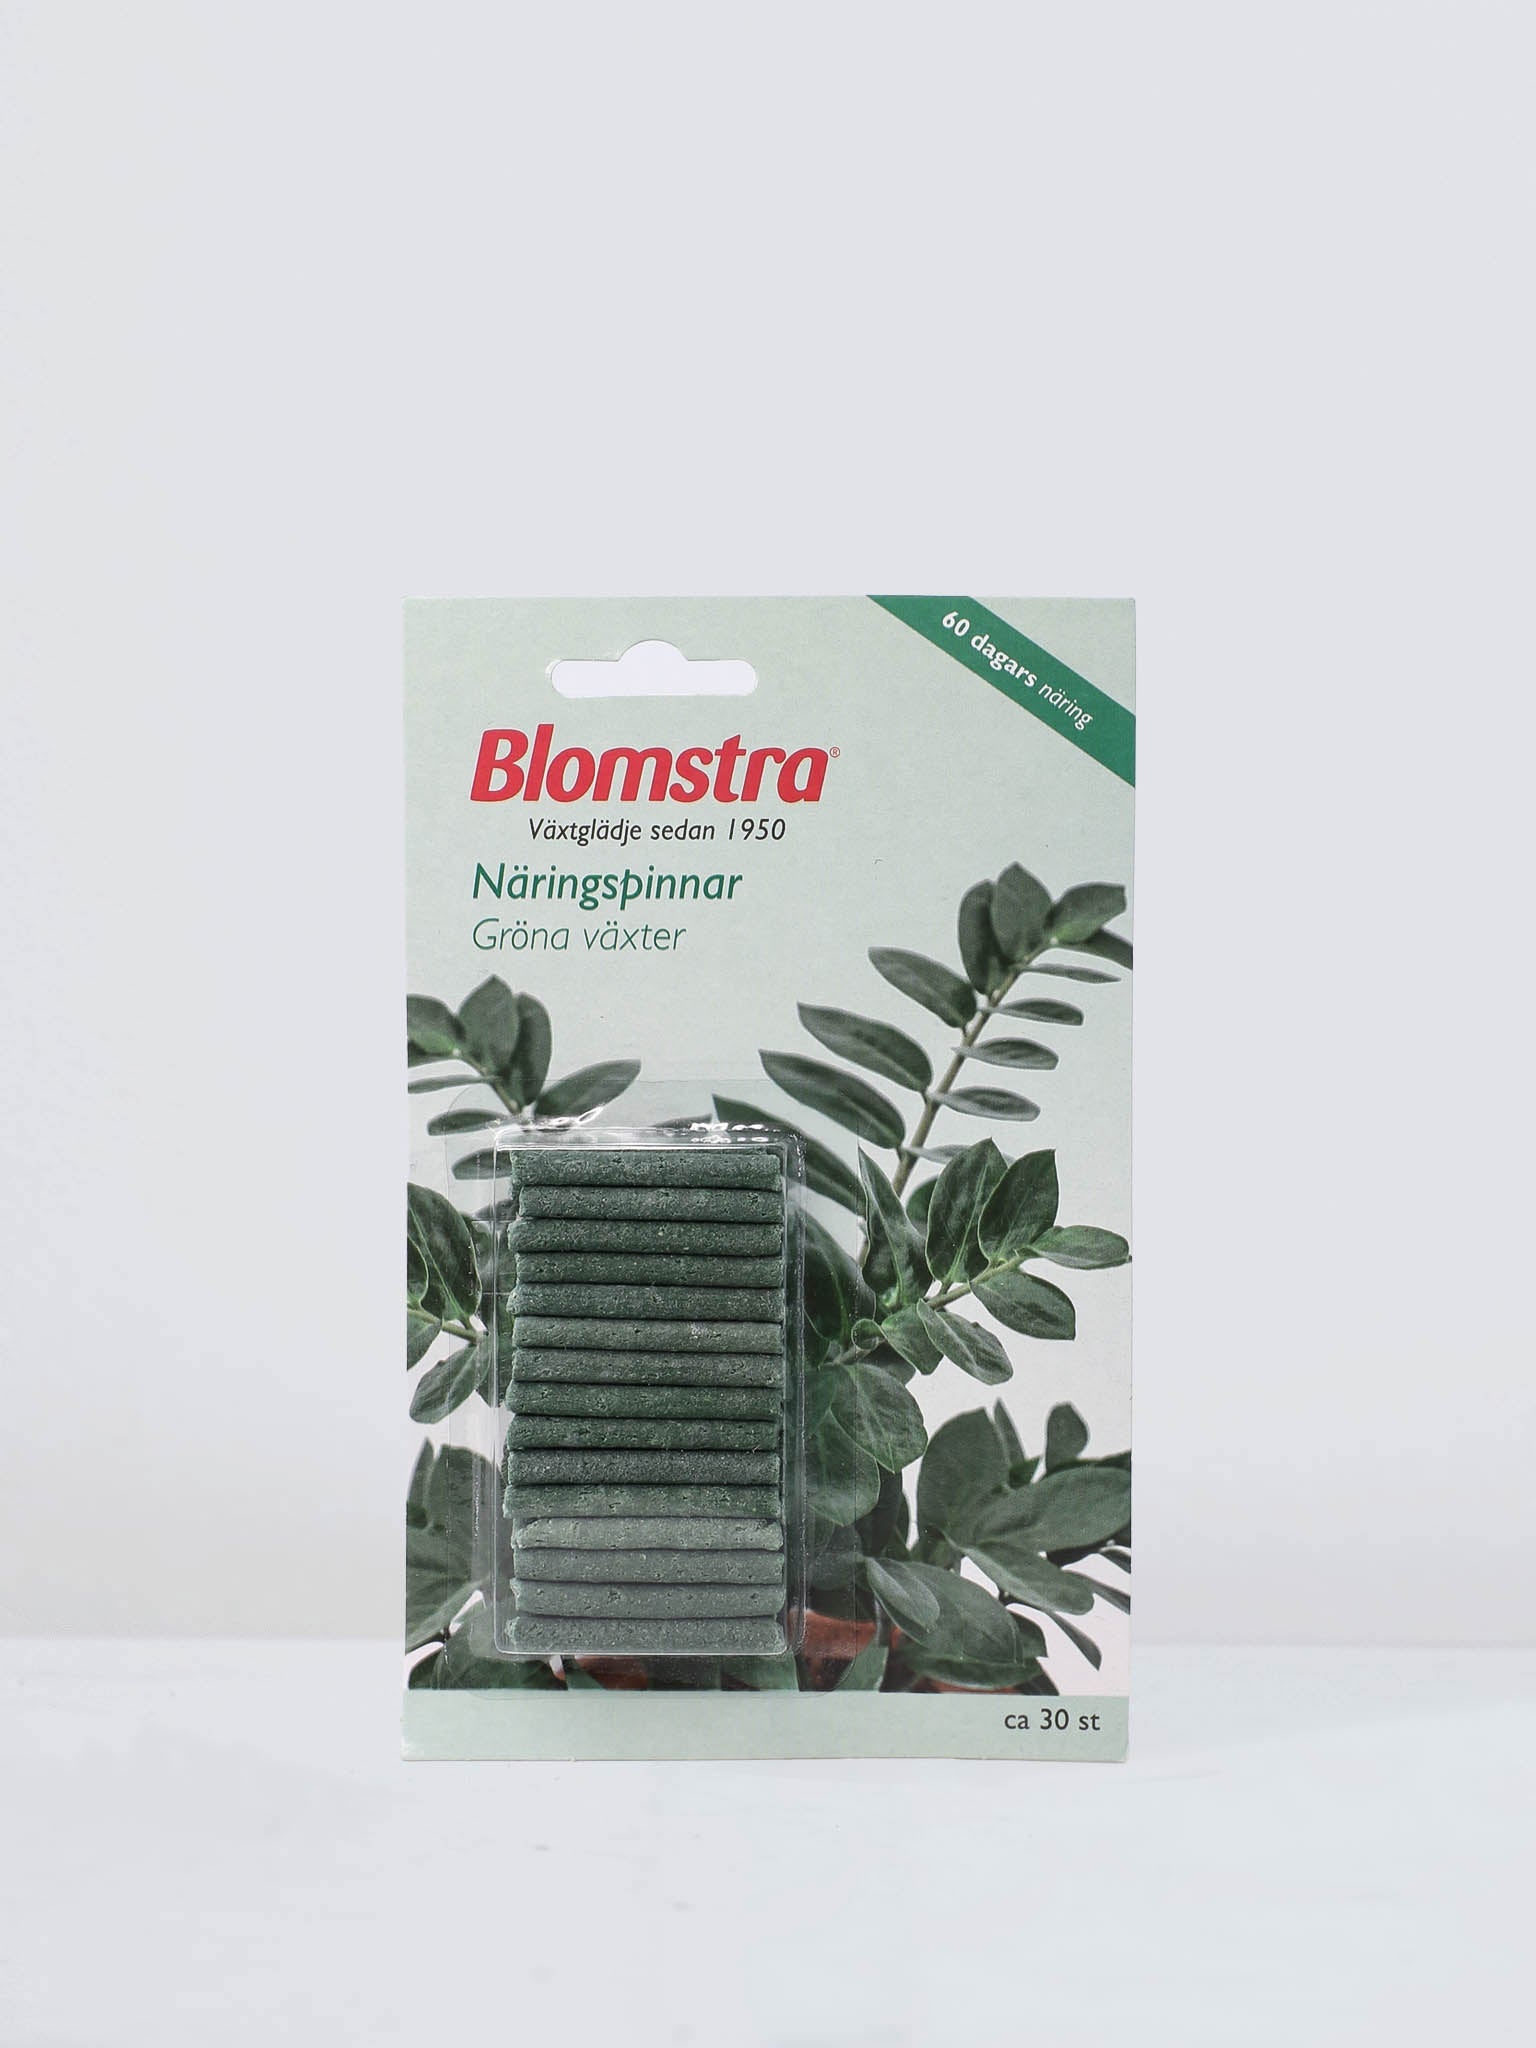 Näringspinnar 30st - Gröna växter - Plantredo